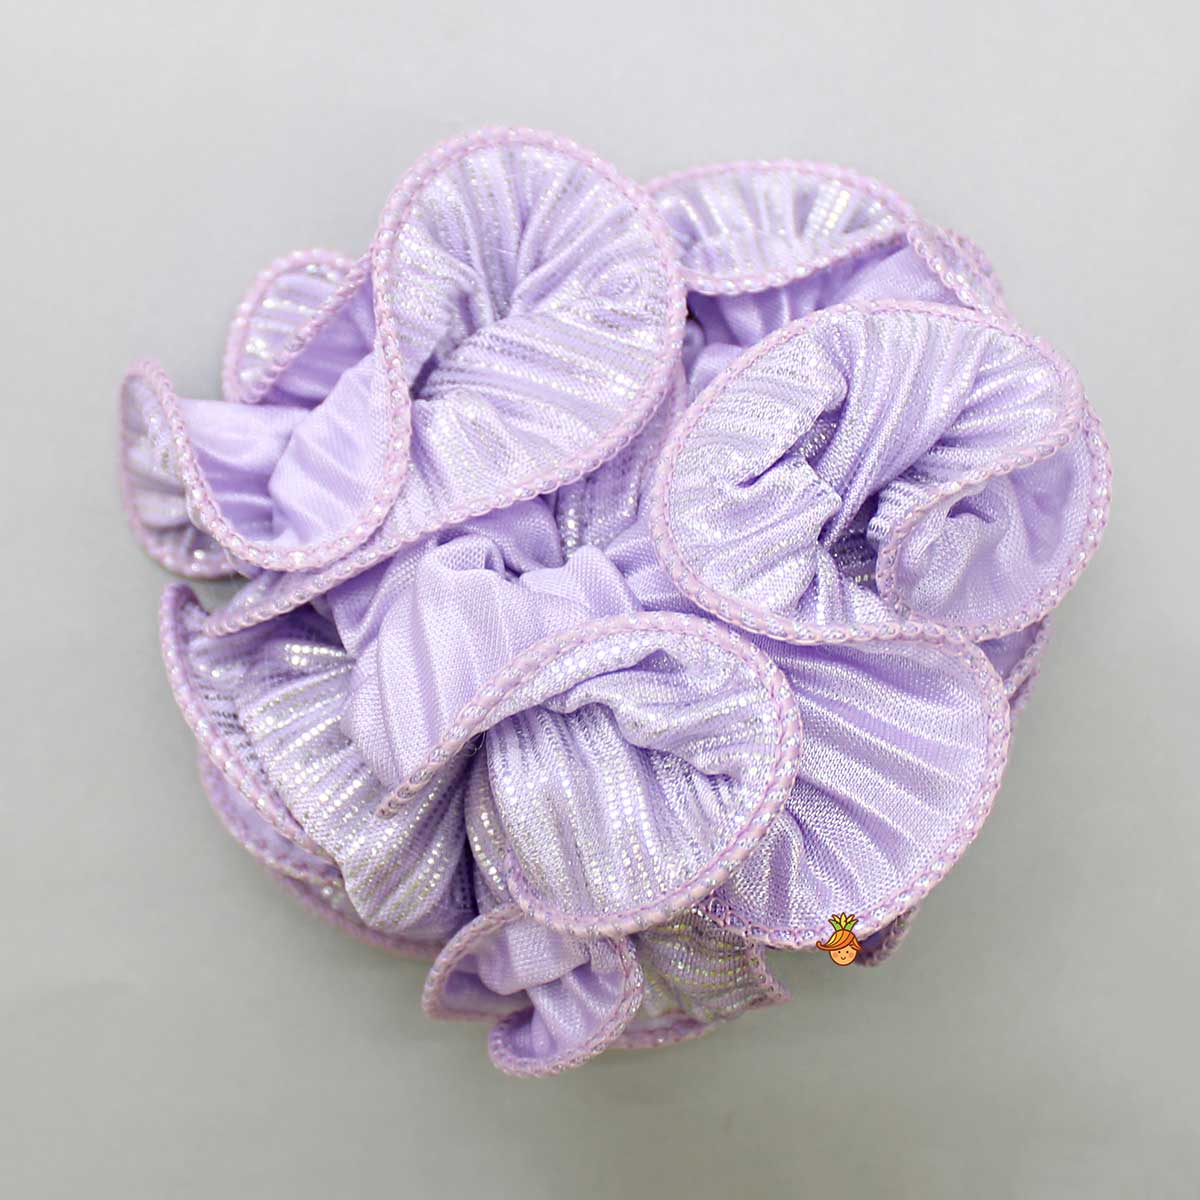 Adorable Shimmery One Shoulder Lavender Dress With Flower Embellished Detachable Drape And Hair Clip